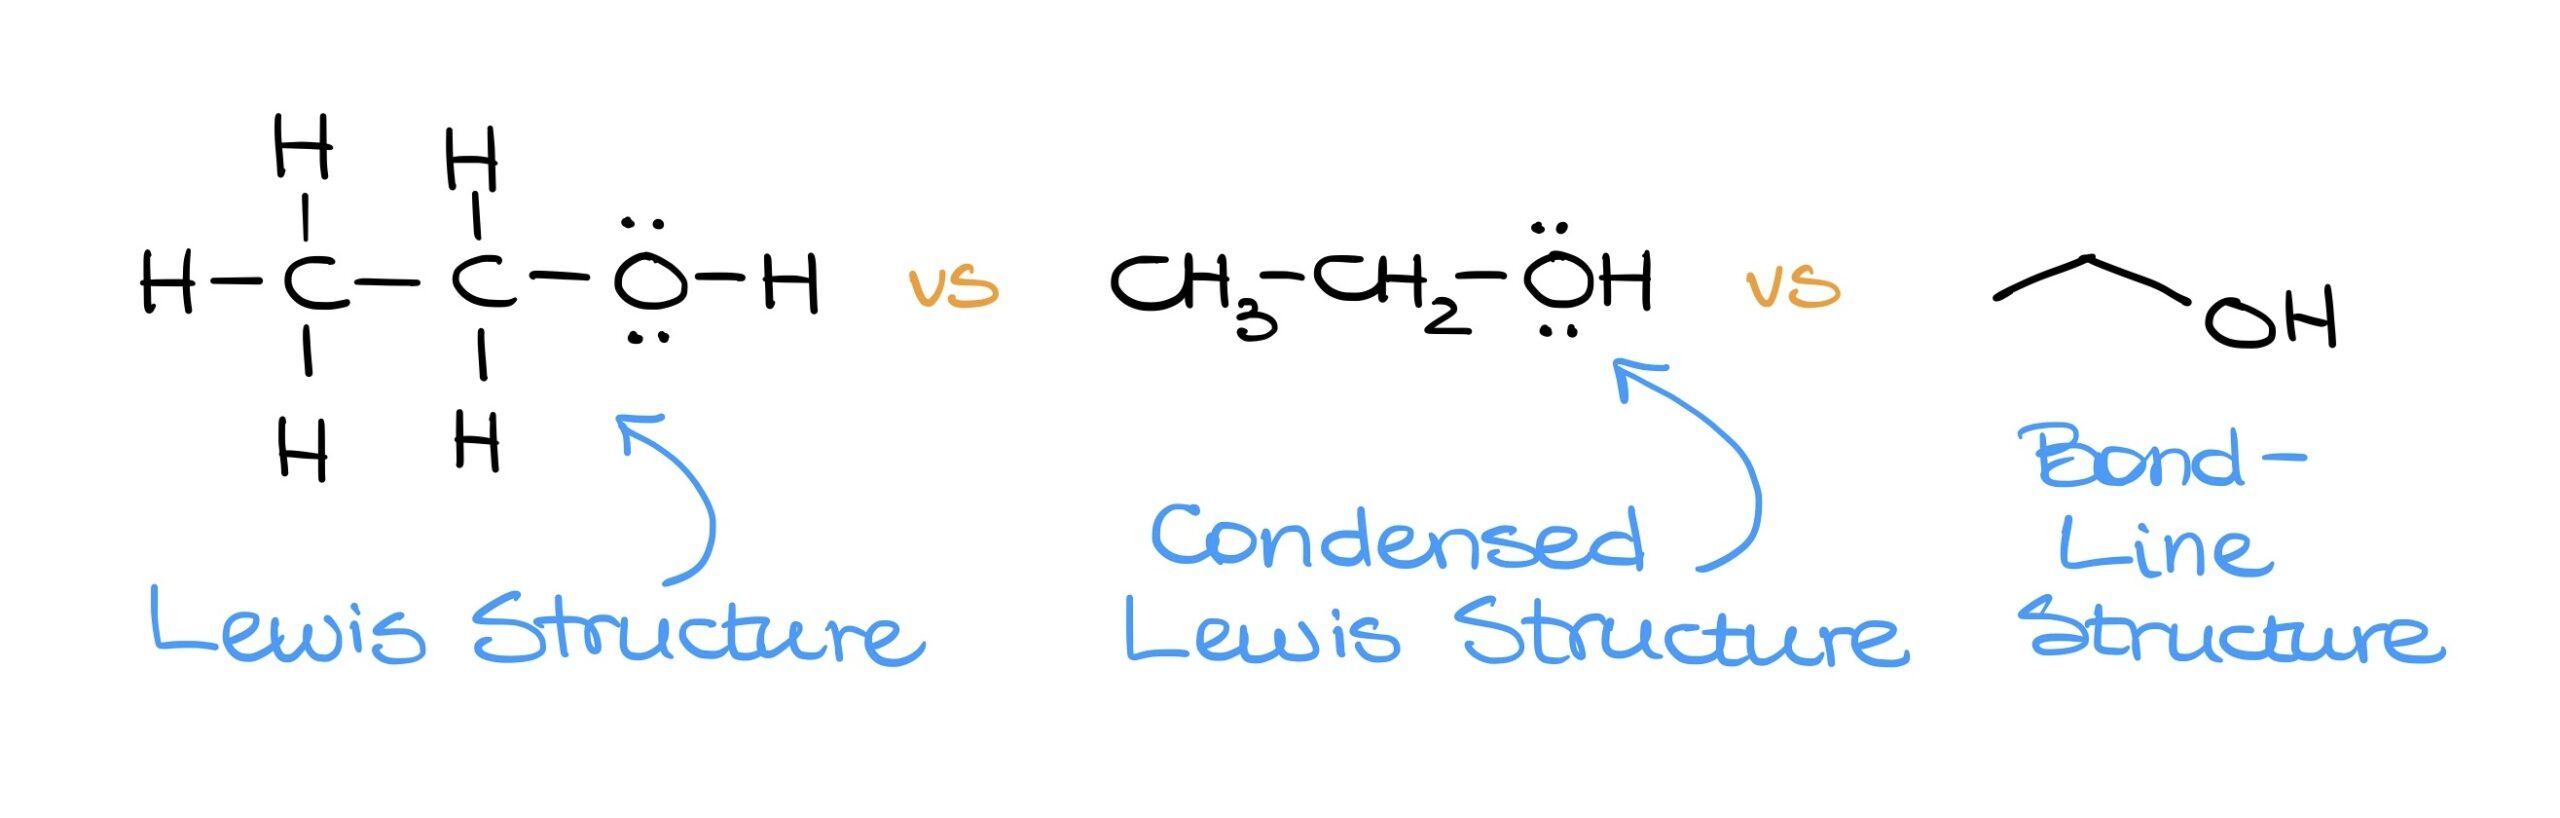 Lewis structure vs condensed Lewis structure vs Bond-Line structure